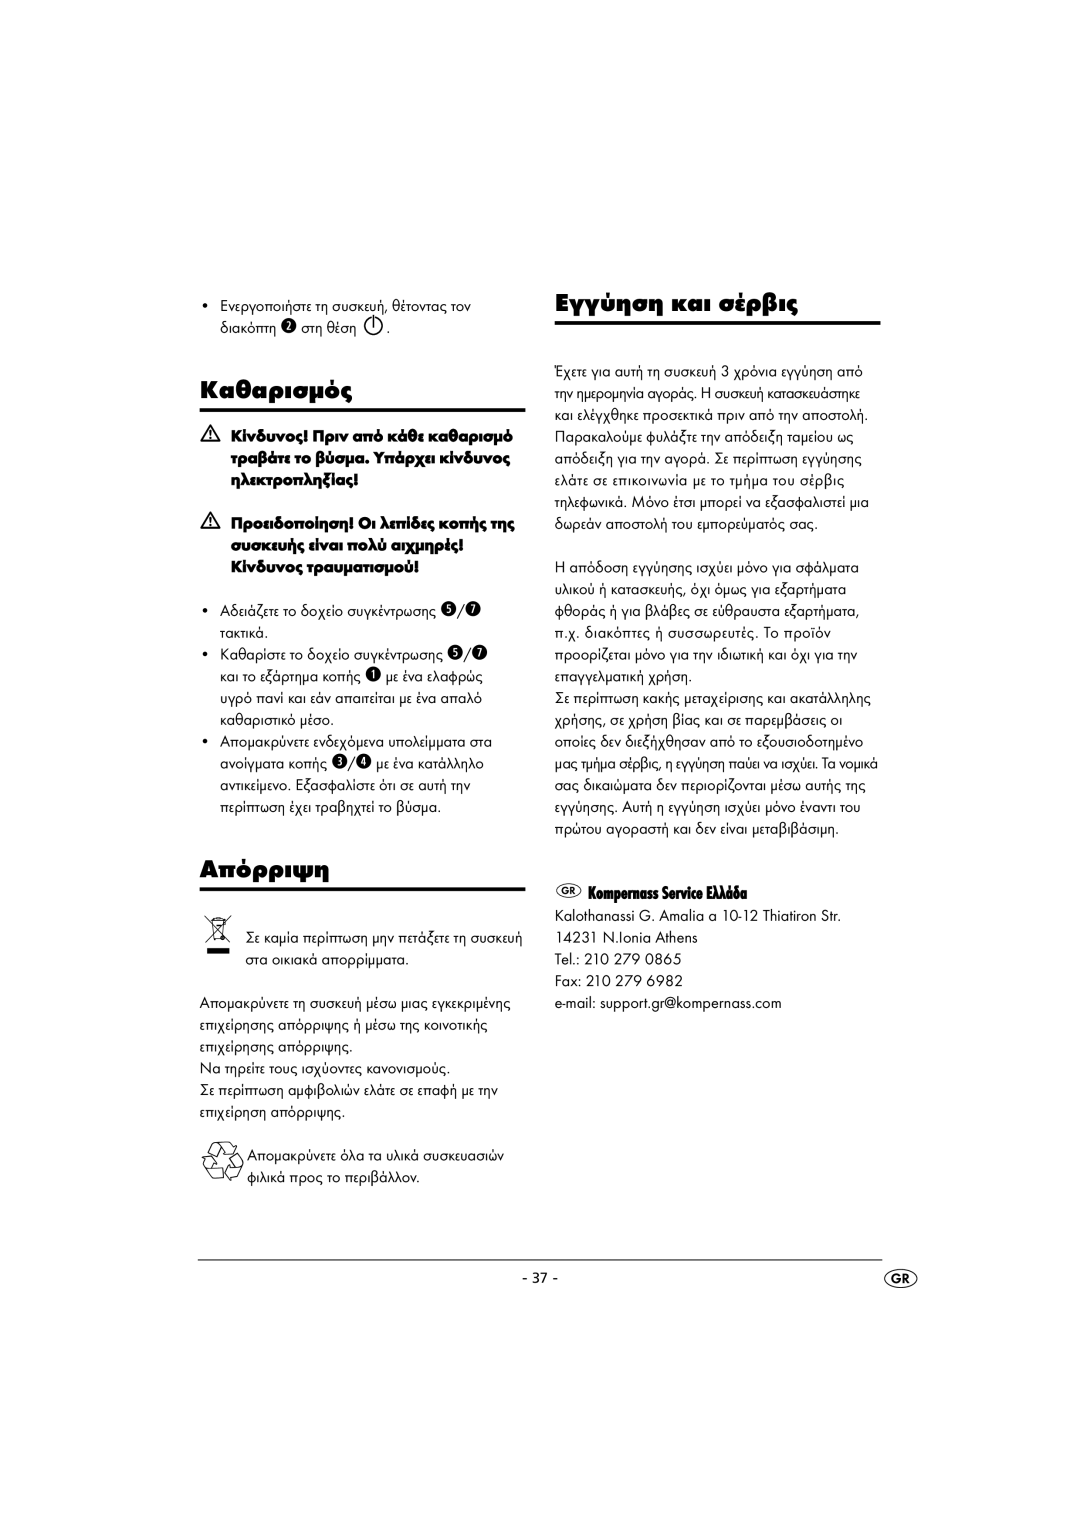 Kompernass KH 4405 manual Καθαρισµός, Εγγύηση και σέρβις, Απόρριψη, Kompernass Service Eλλάδα 